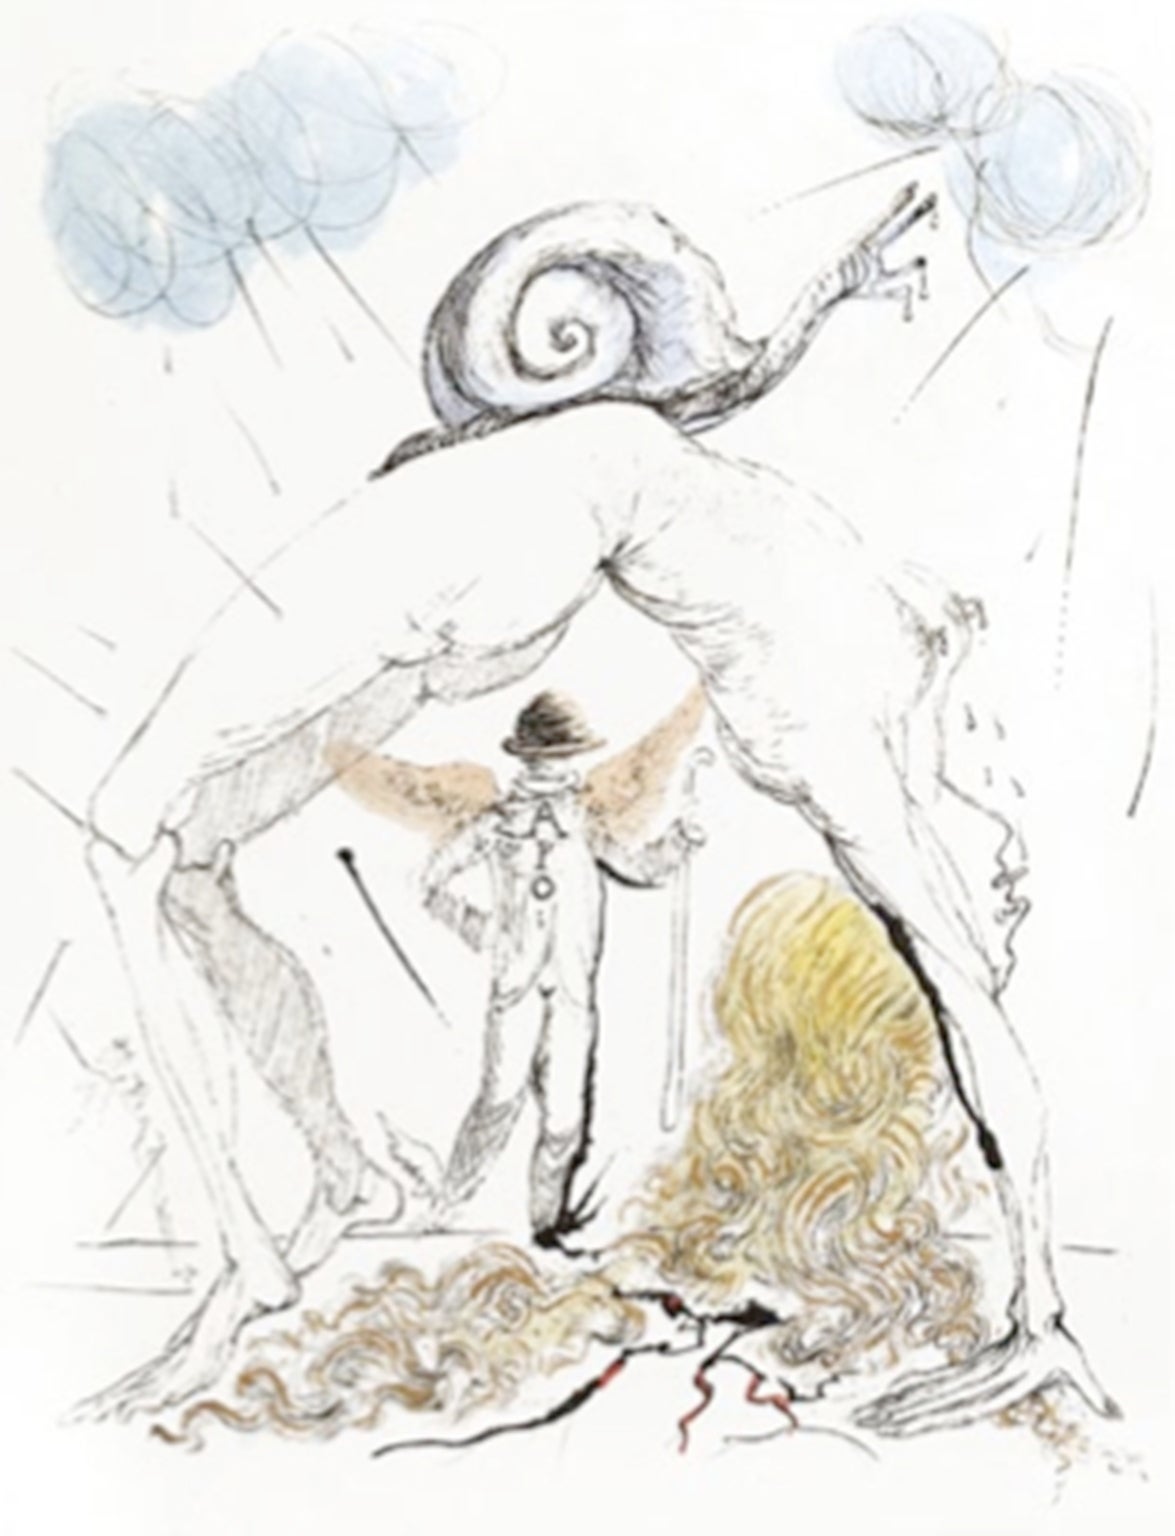 Femme a l’Escargot (Woman with Snail) - Print by Salvador Dalí